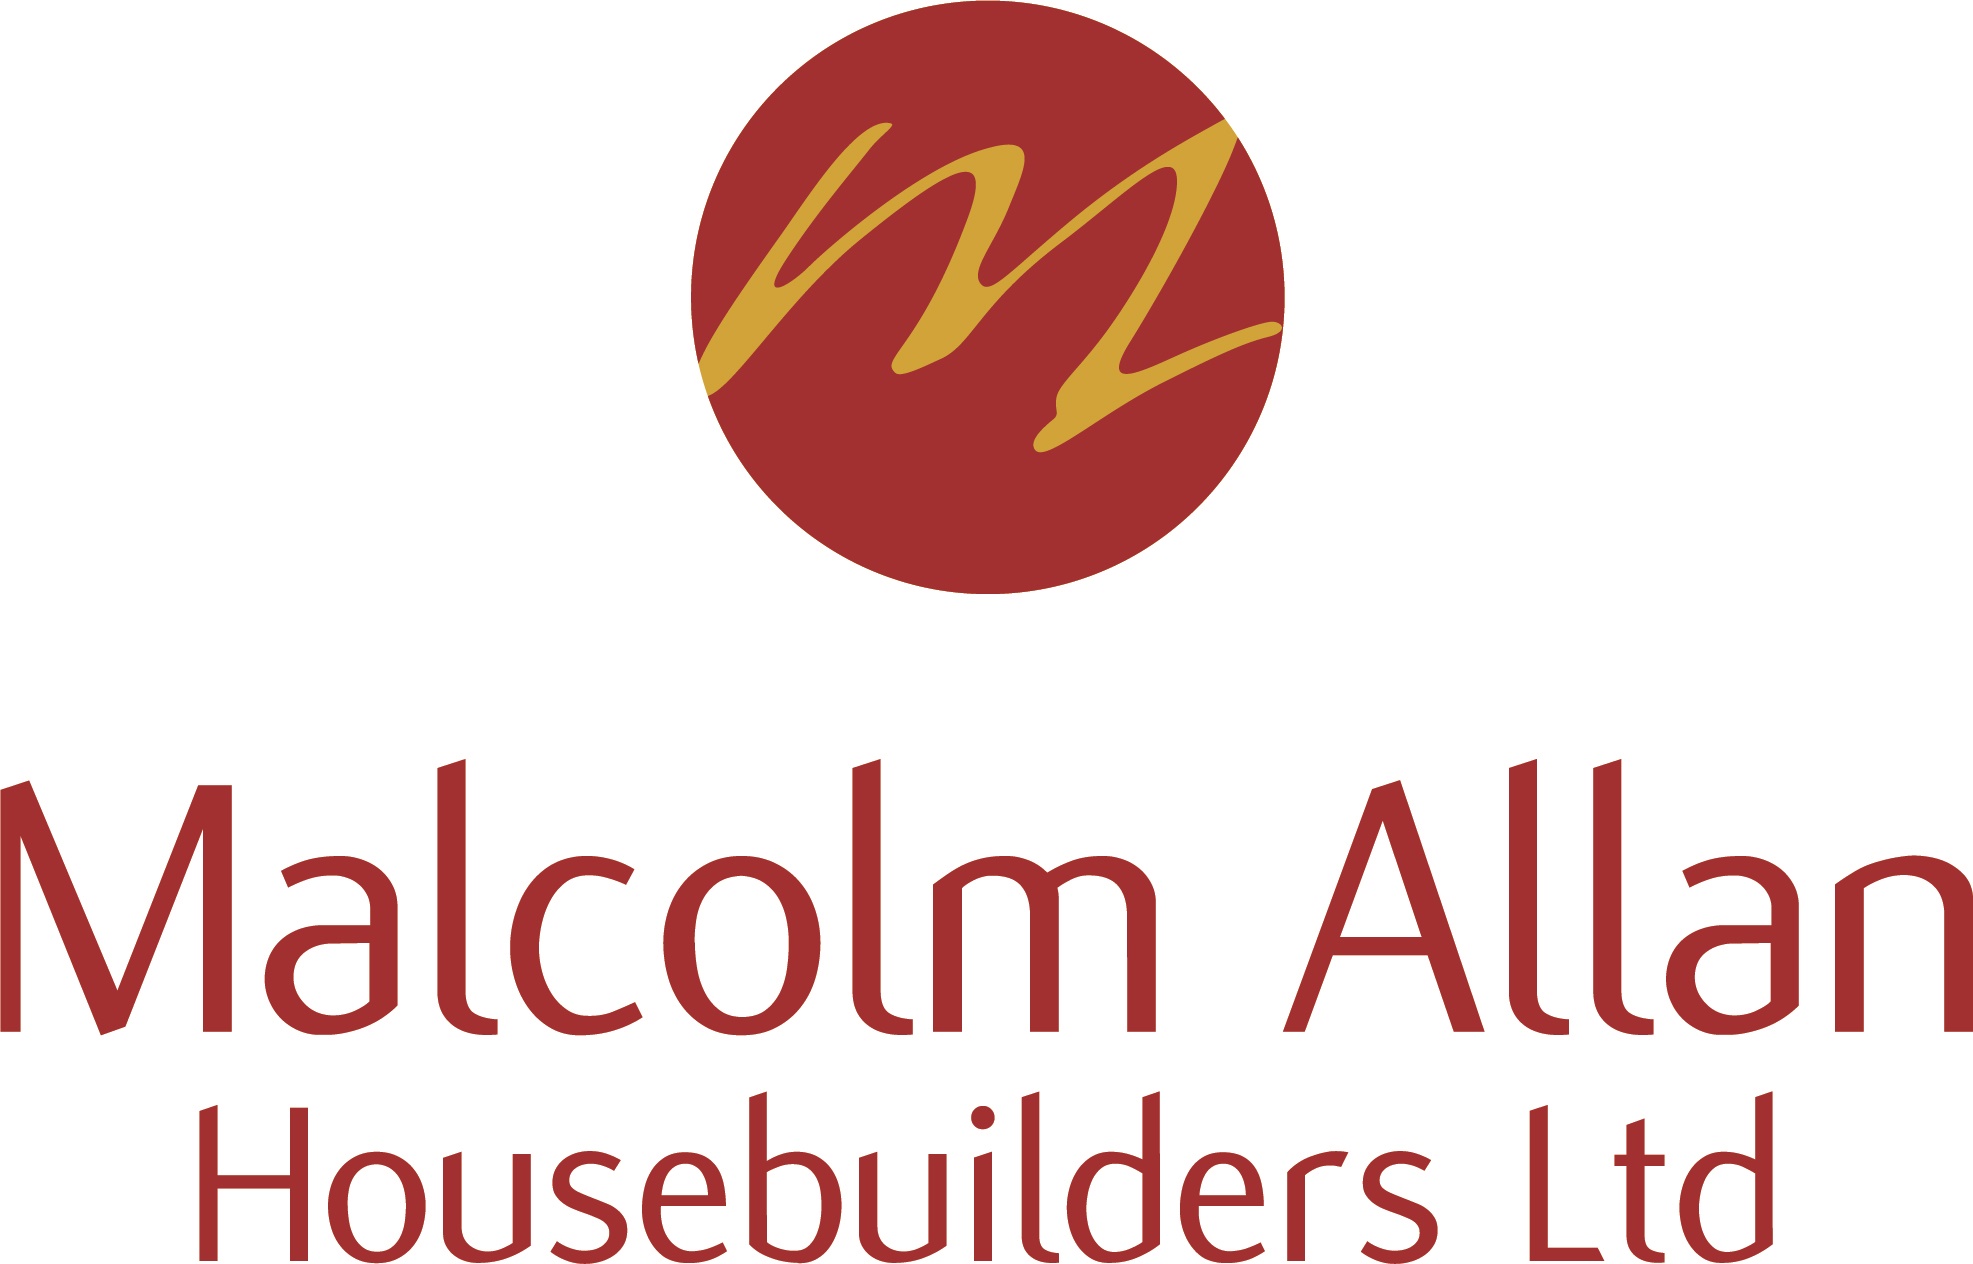 Malcolm Allan Housebuilders joins Grandhome development project